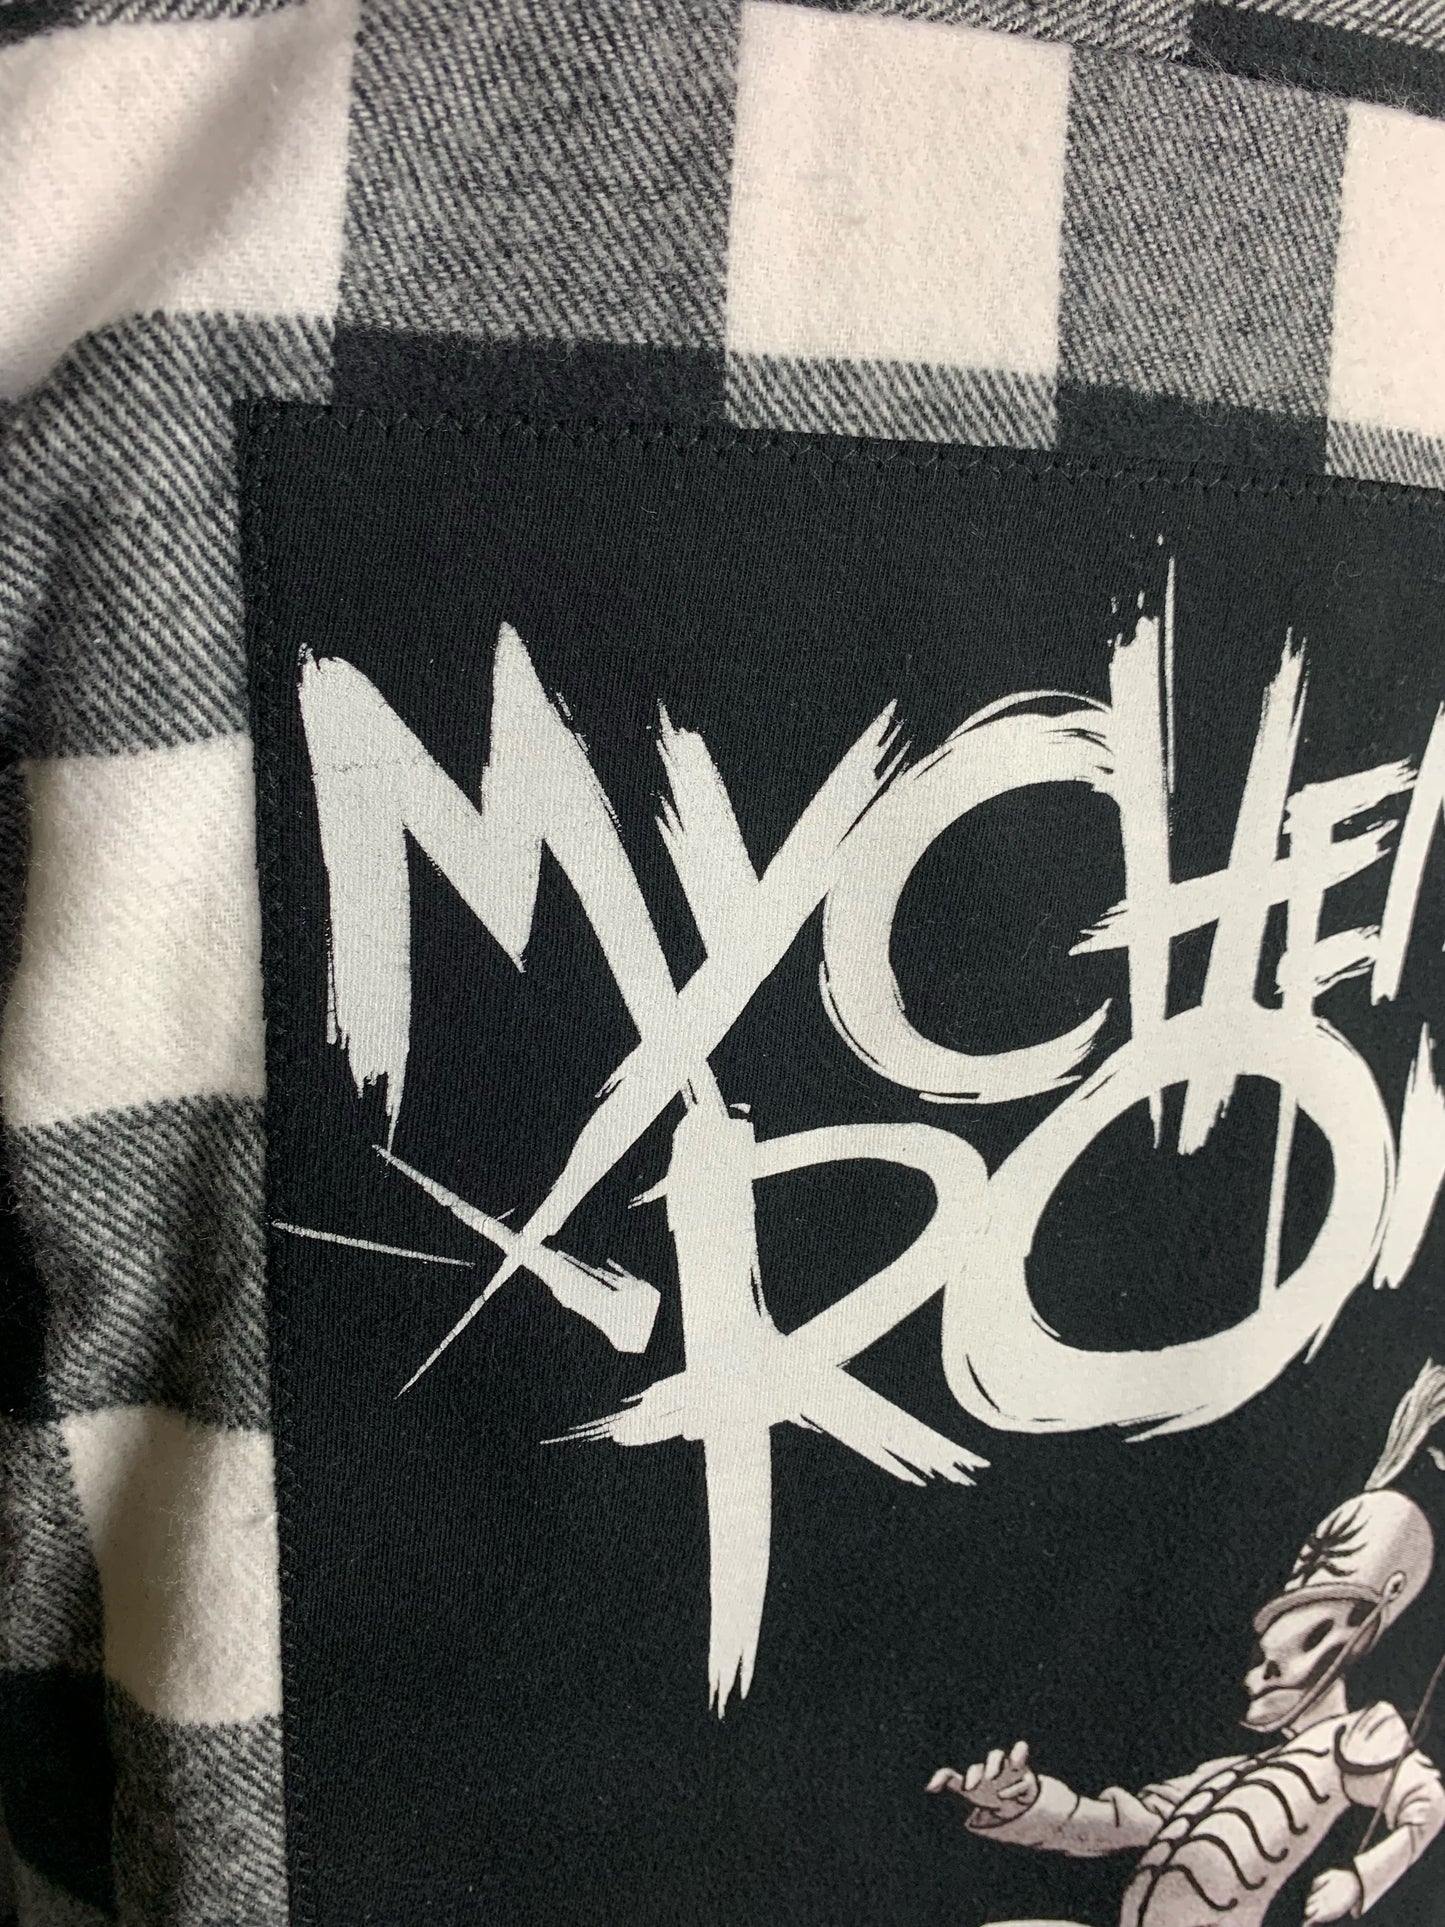 My Chemical Romance Flannel Shirt Custom Rework M